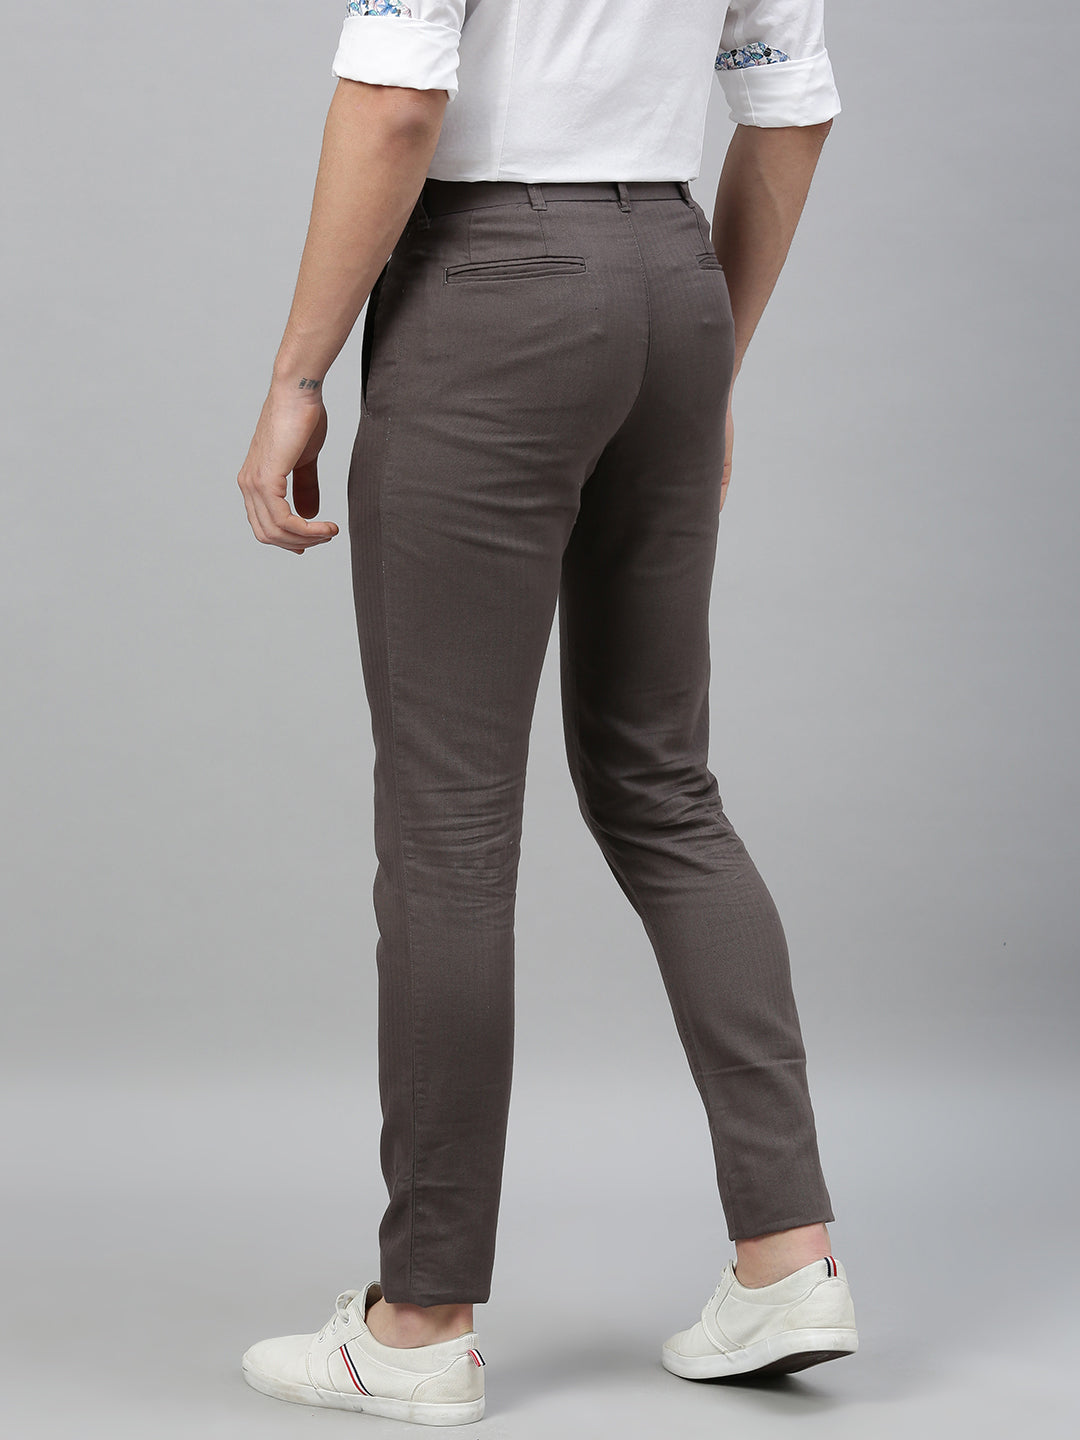 Mens chino pants  dark grey P869  MODONE wholesale  Clothing For Men